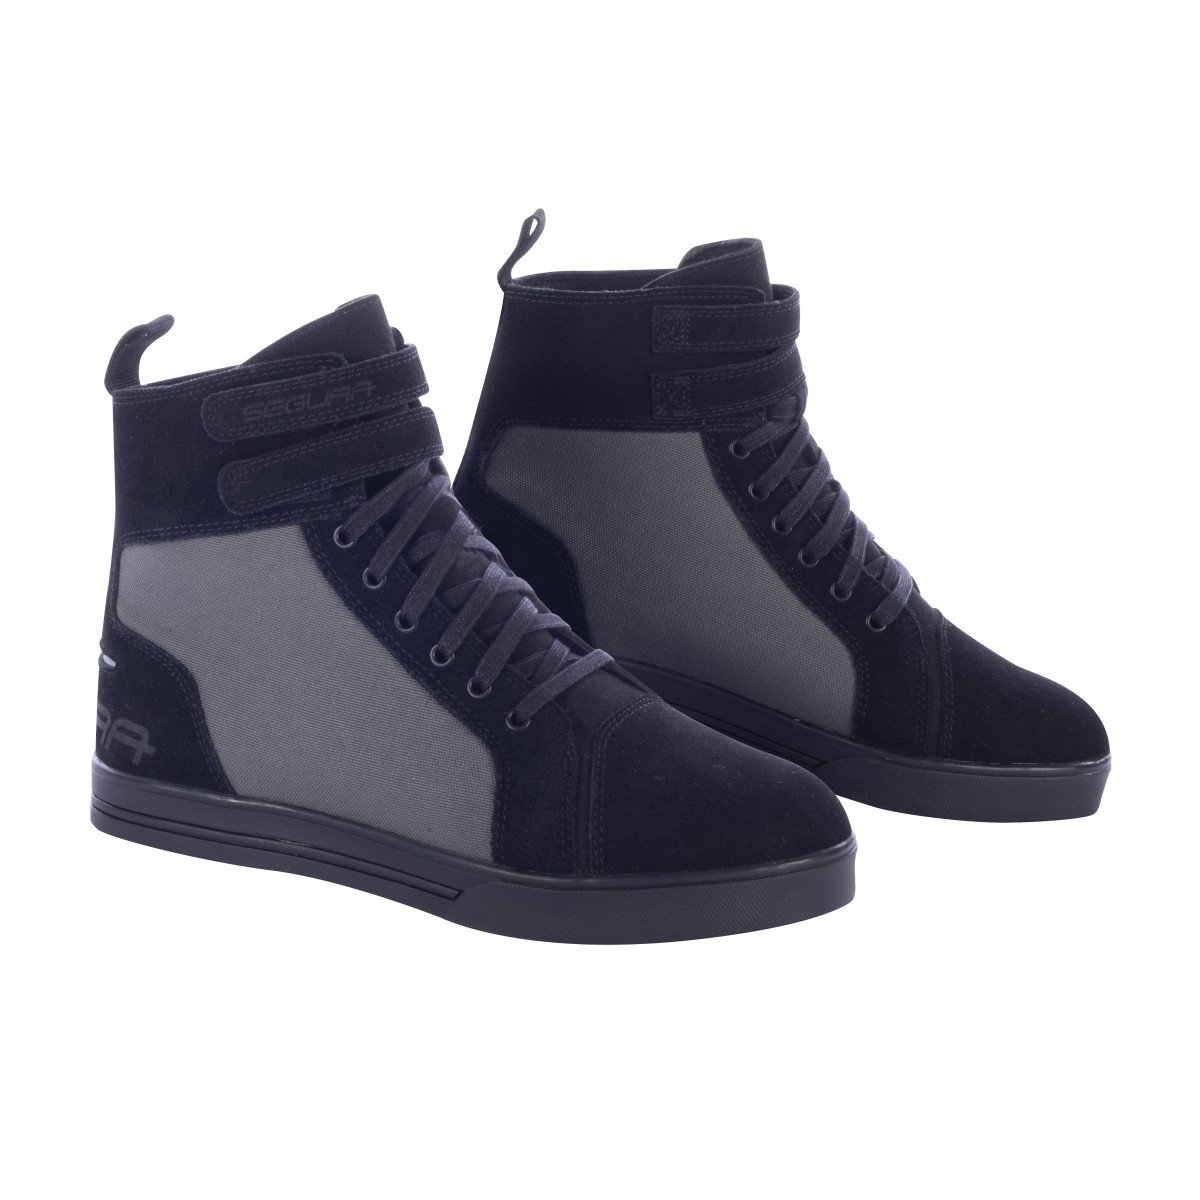 Image of Segura Sneakers Contact Black Grey Size 40 EN